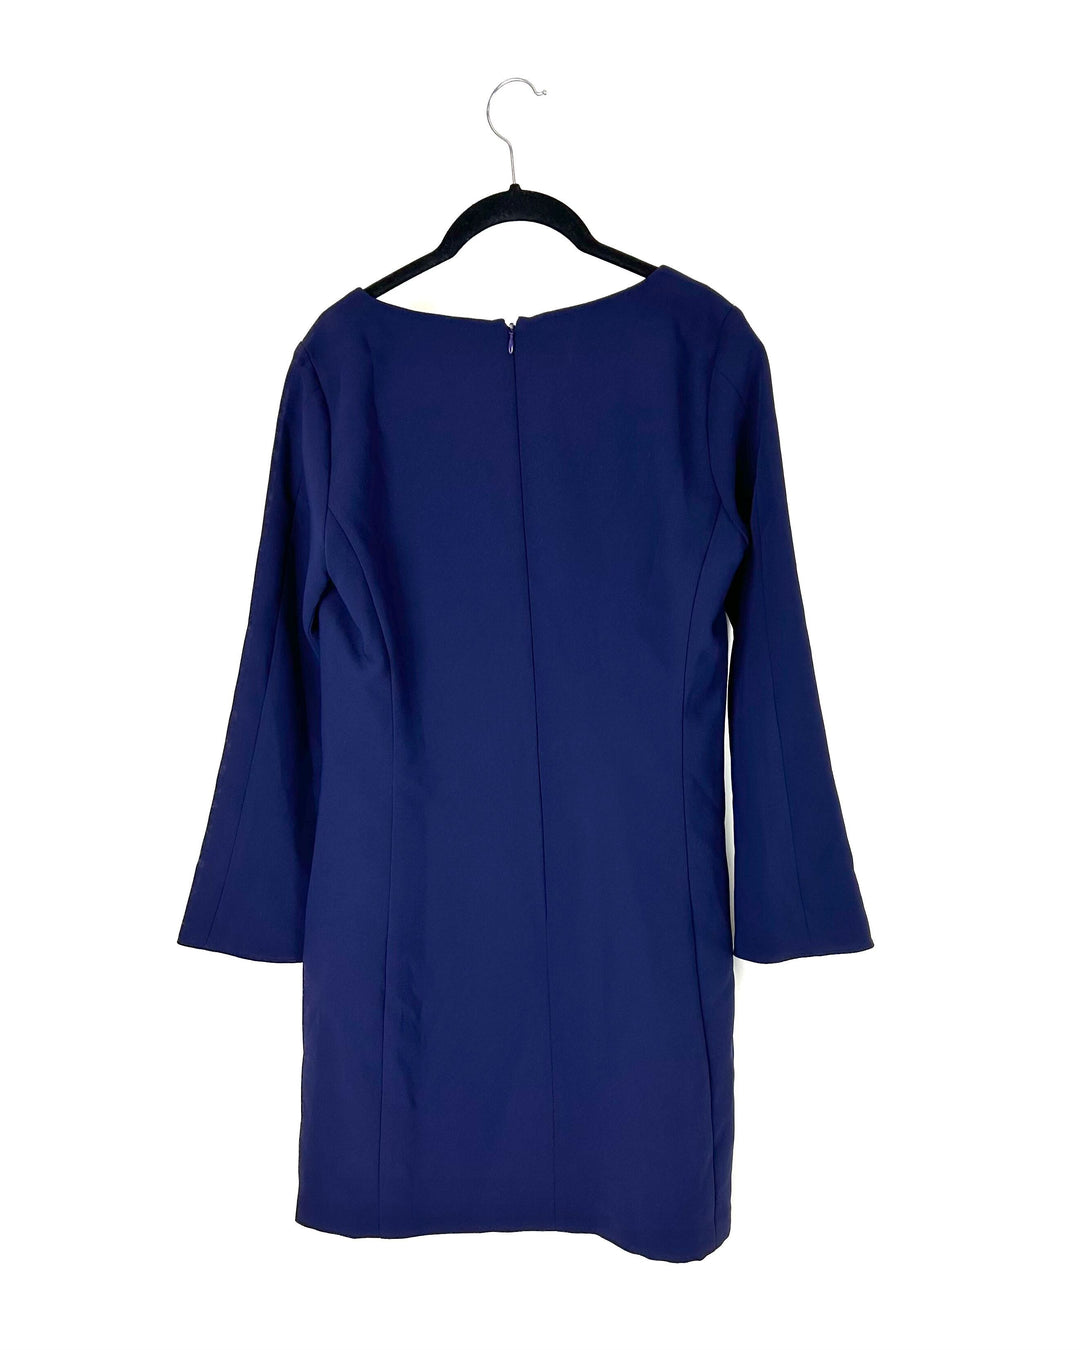 Navy Blue Long Sleeve Dress - Size 2/4